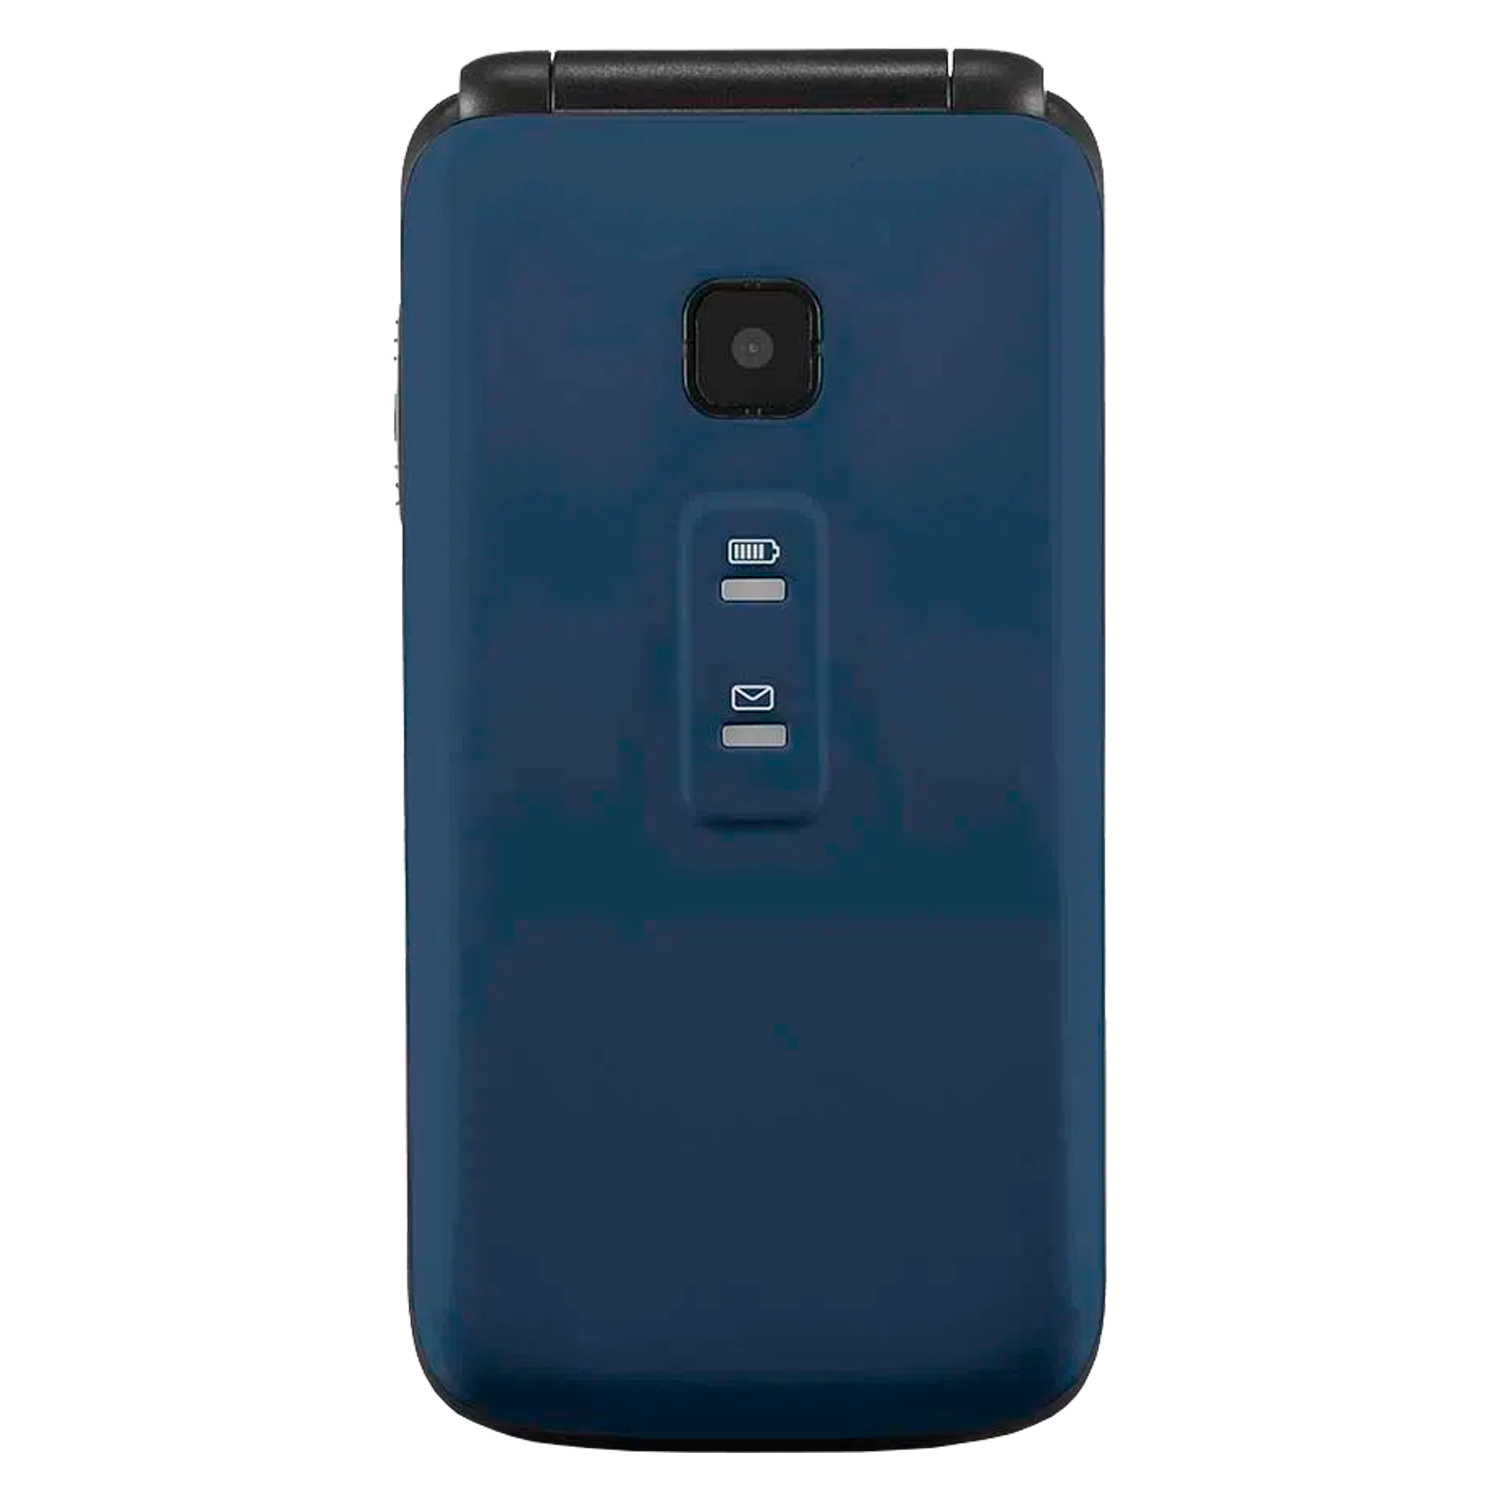 Celular Multilaser Flip Vita P9020 Dual SIM / Tela 2.4" / Câmera 0.3MP - Azul